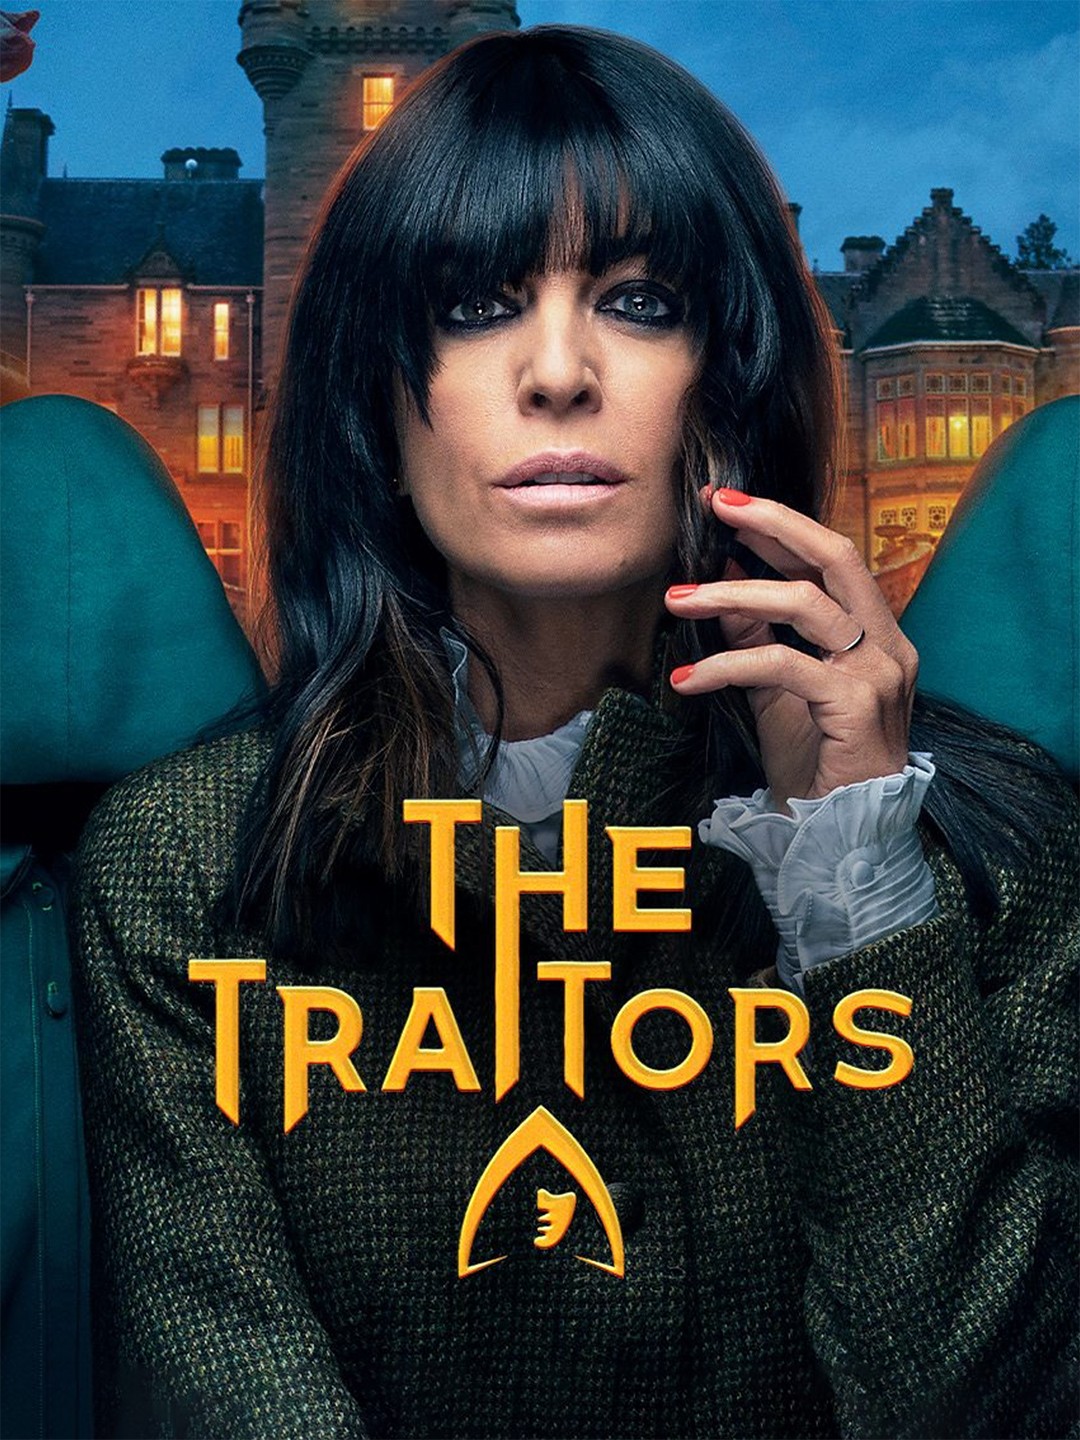 The Traitors UK (TV Series 2022– ) - IMDb